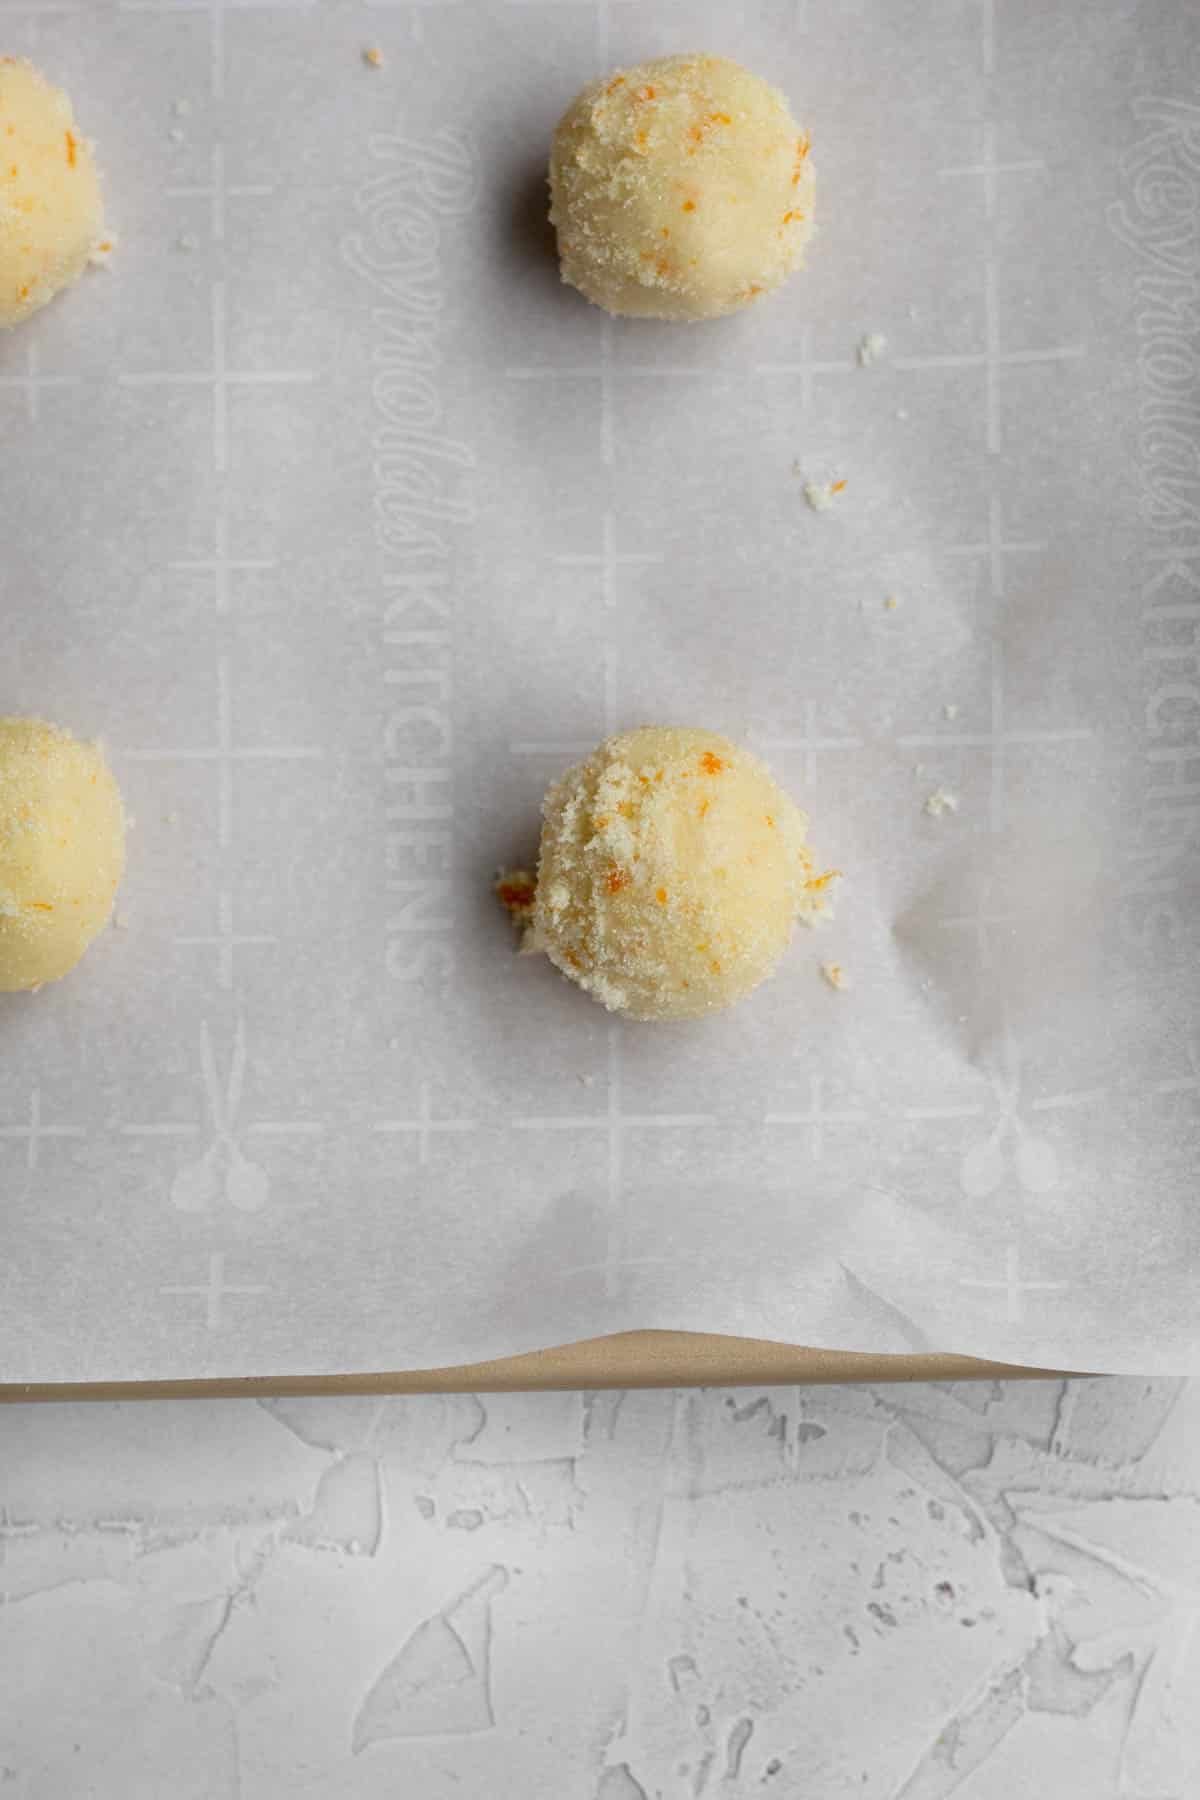 Scooped balls of Orange Shortbread Cookie dough balls on parchment paper.